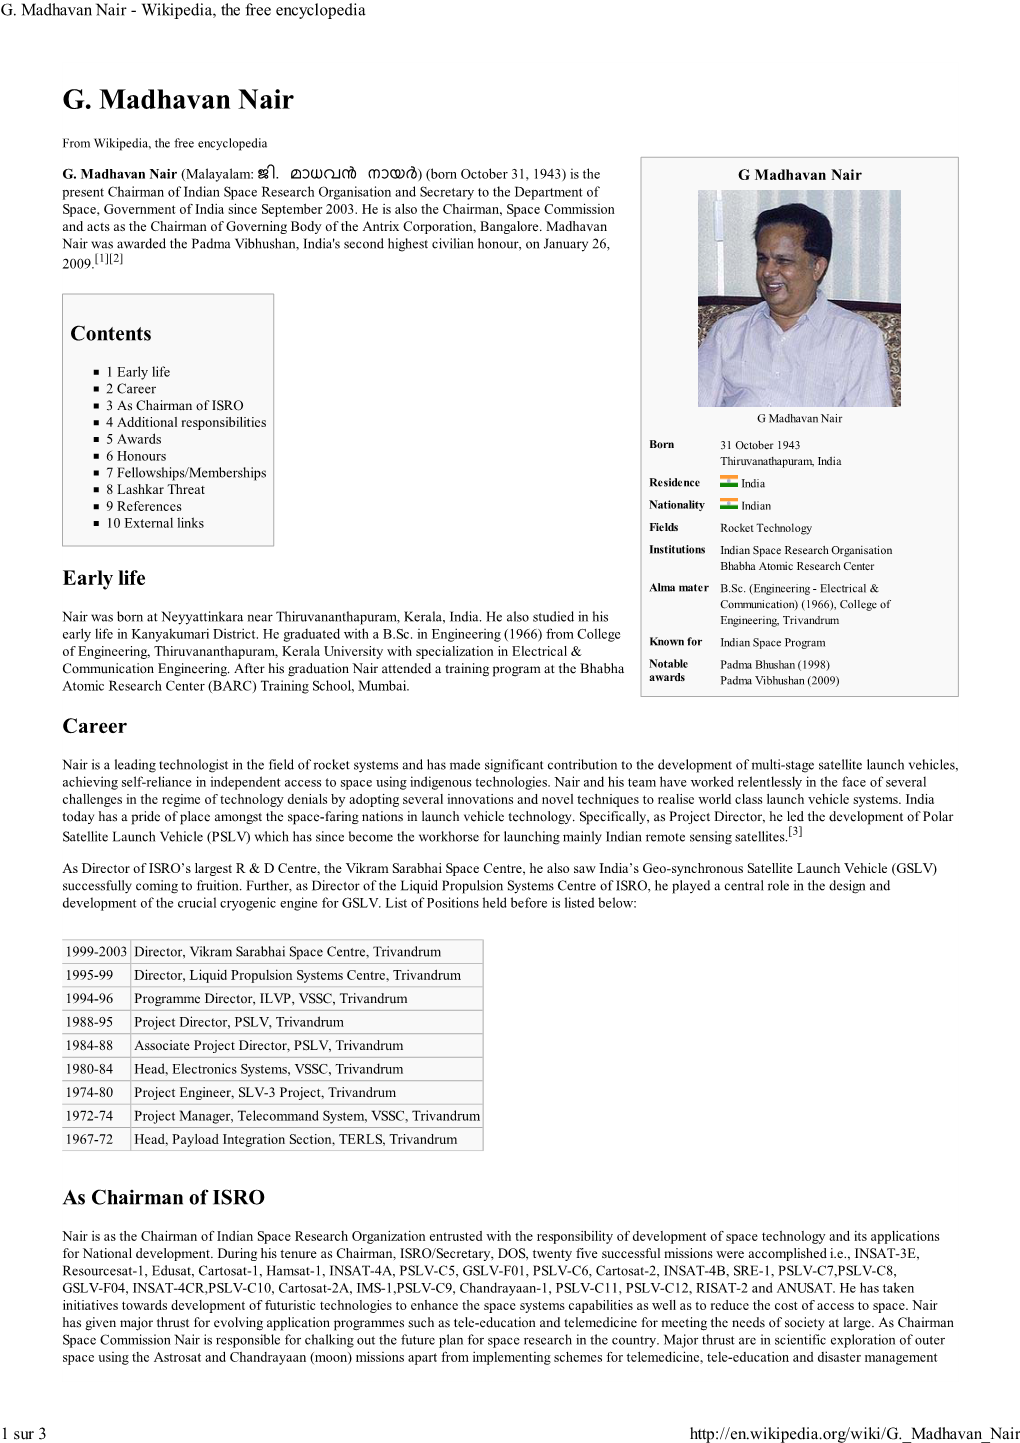 G. Madhavan Nair - Wikipedia, the Free Encyclopedia